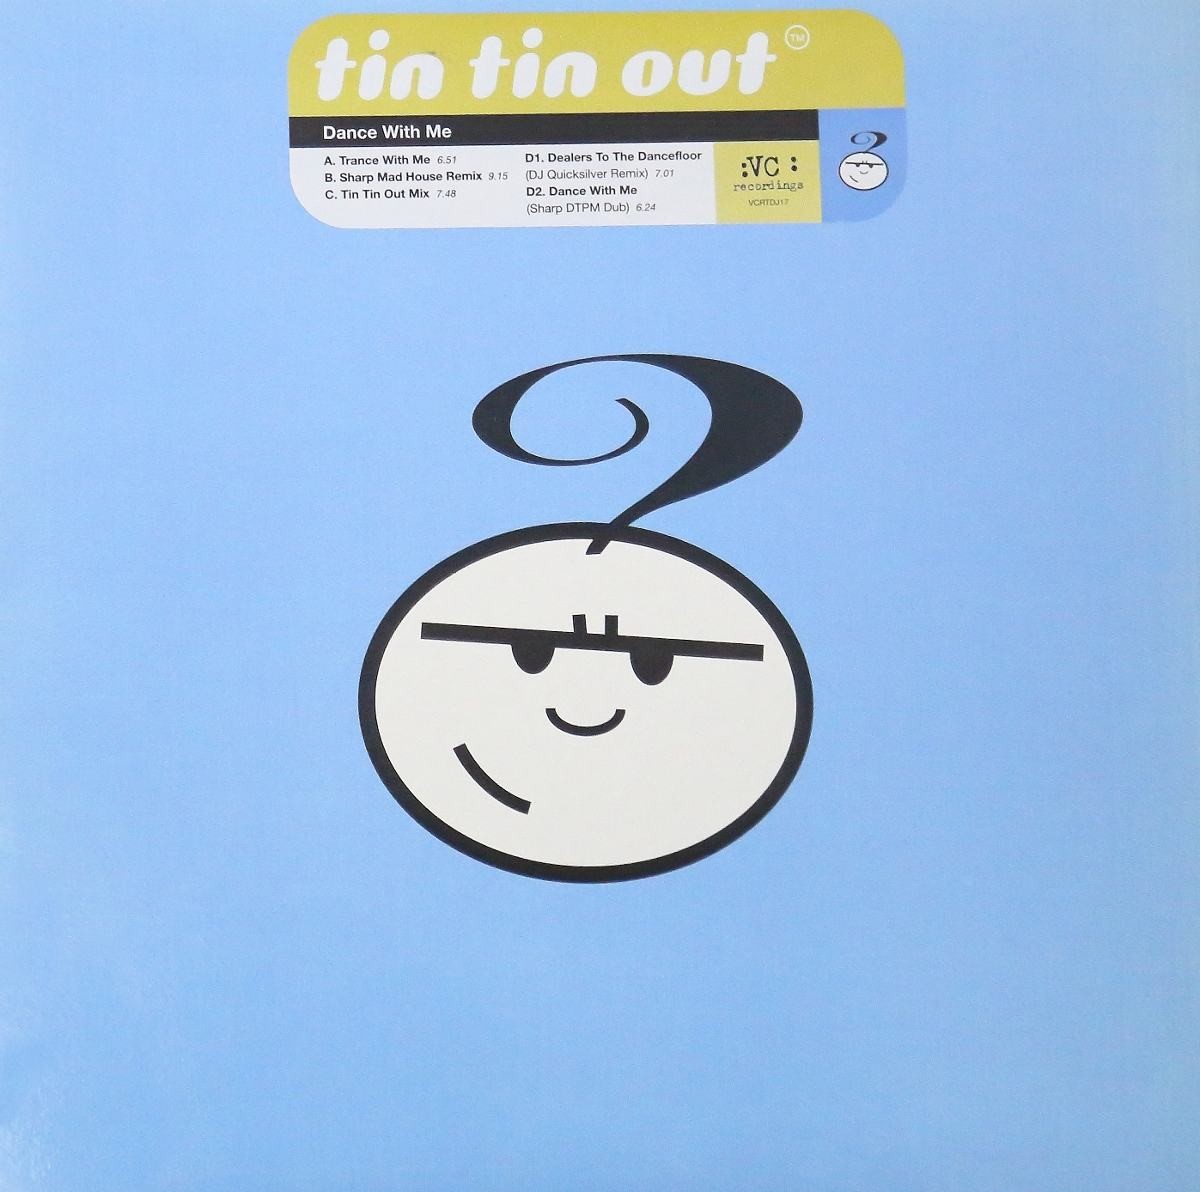 Tin Tin Out - Dance with me (Trance with me / 2 Sharp Mixes / Tin Tin Out mix) / Dealers to the dancefloor (2 Vinyl)